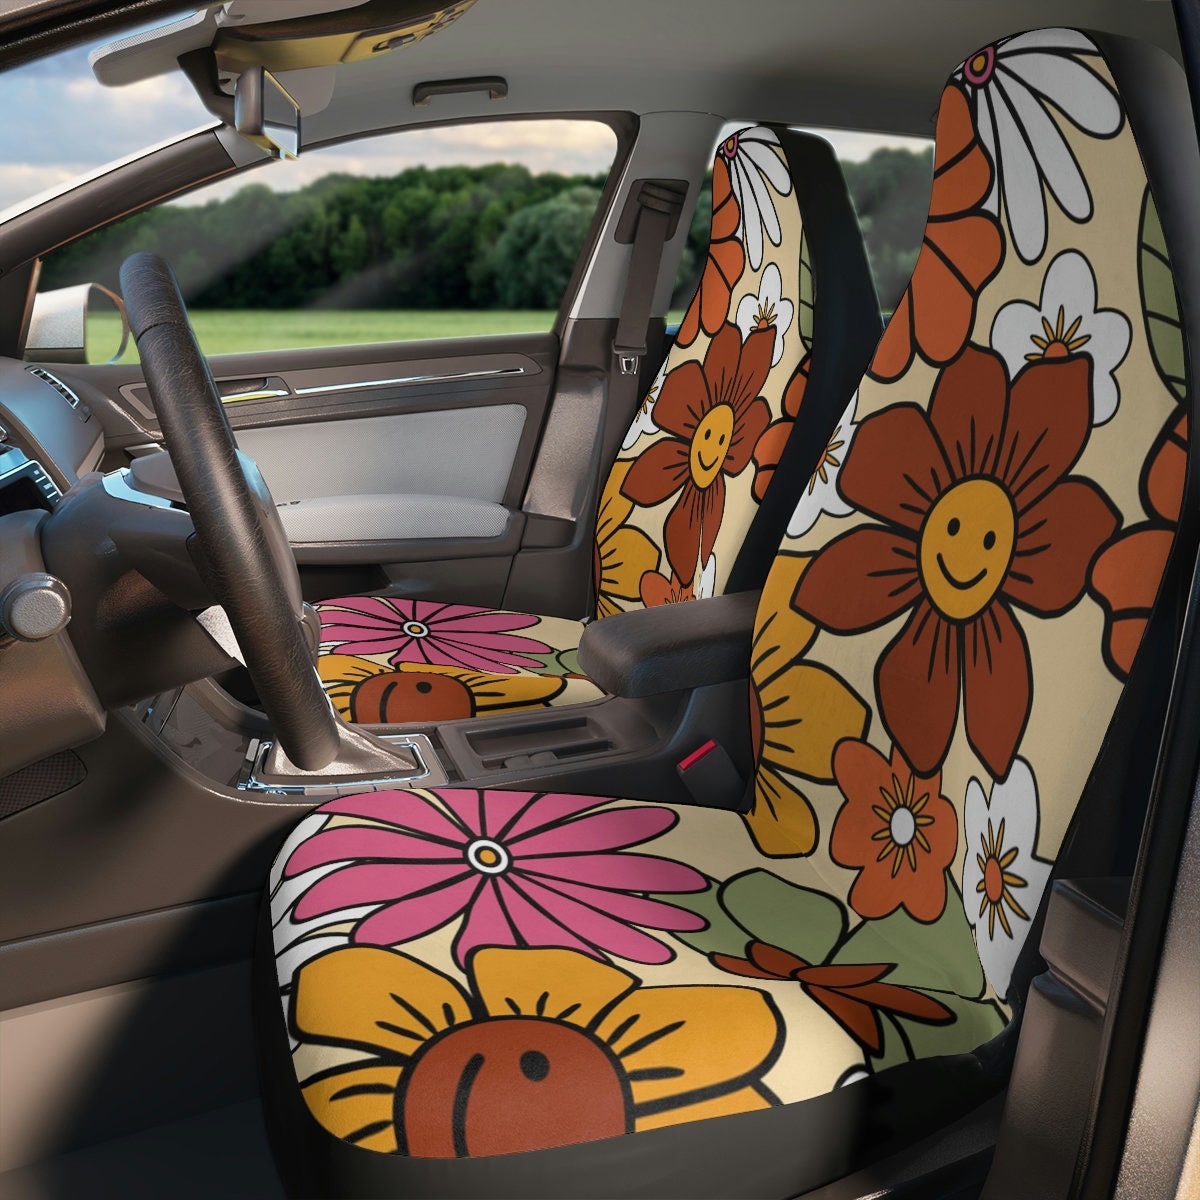 Flower Child Car Floor Mats Retro Inspired 60s 70s Hippie Groovy Car  Accessories Brown Orange Yellow Floral Retro Car Decor 